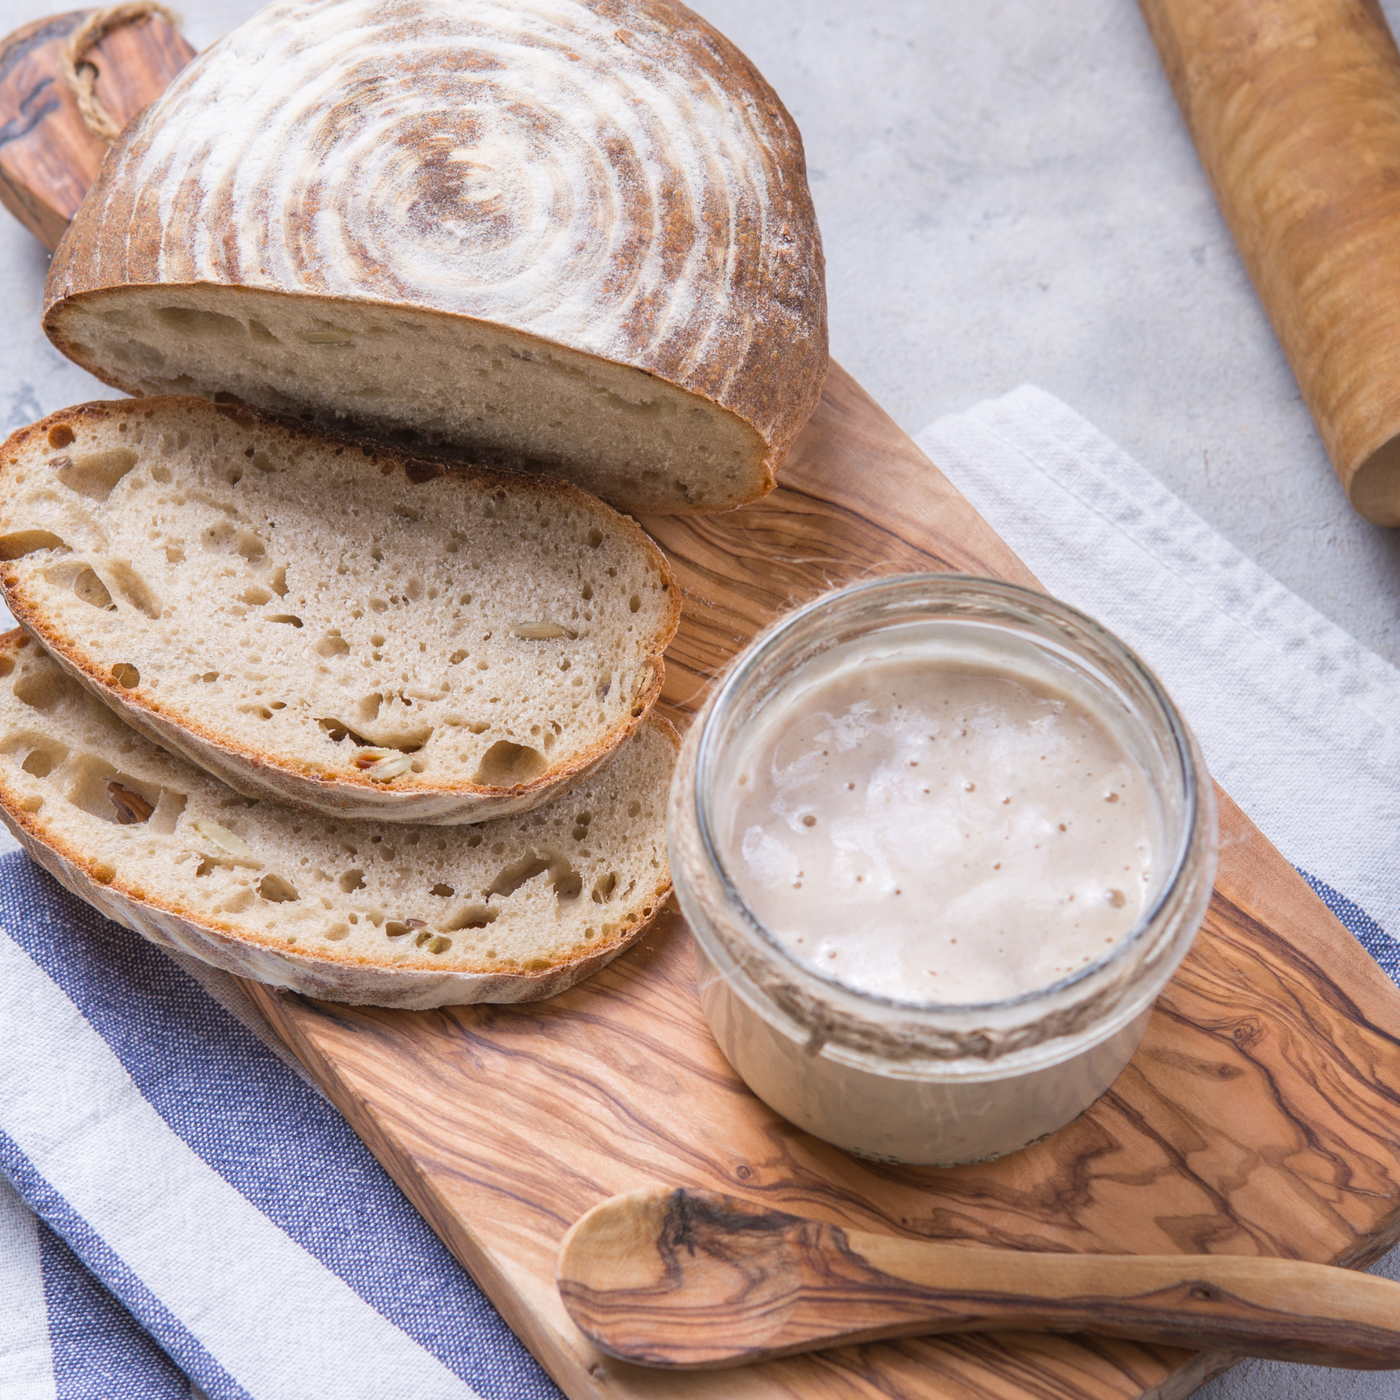 Benefits of Sourdough Bread